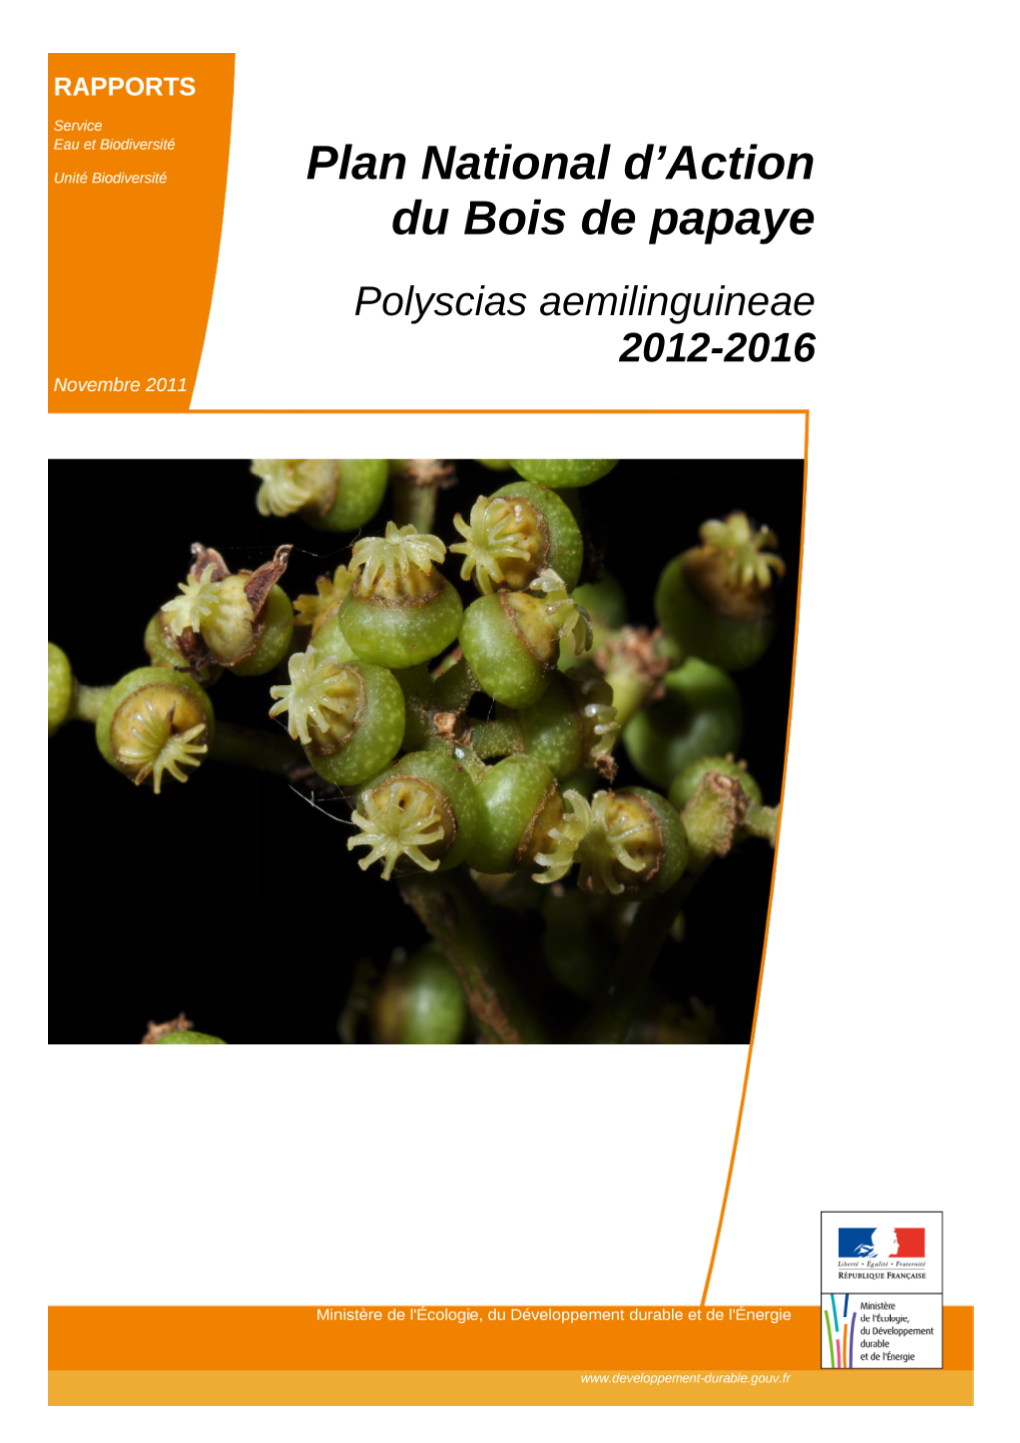 PNA Bois De Papaye Polyscias Aemiliguineae